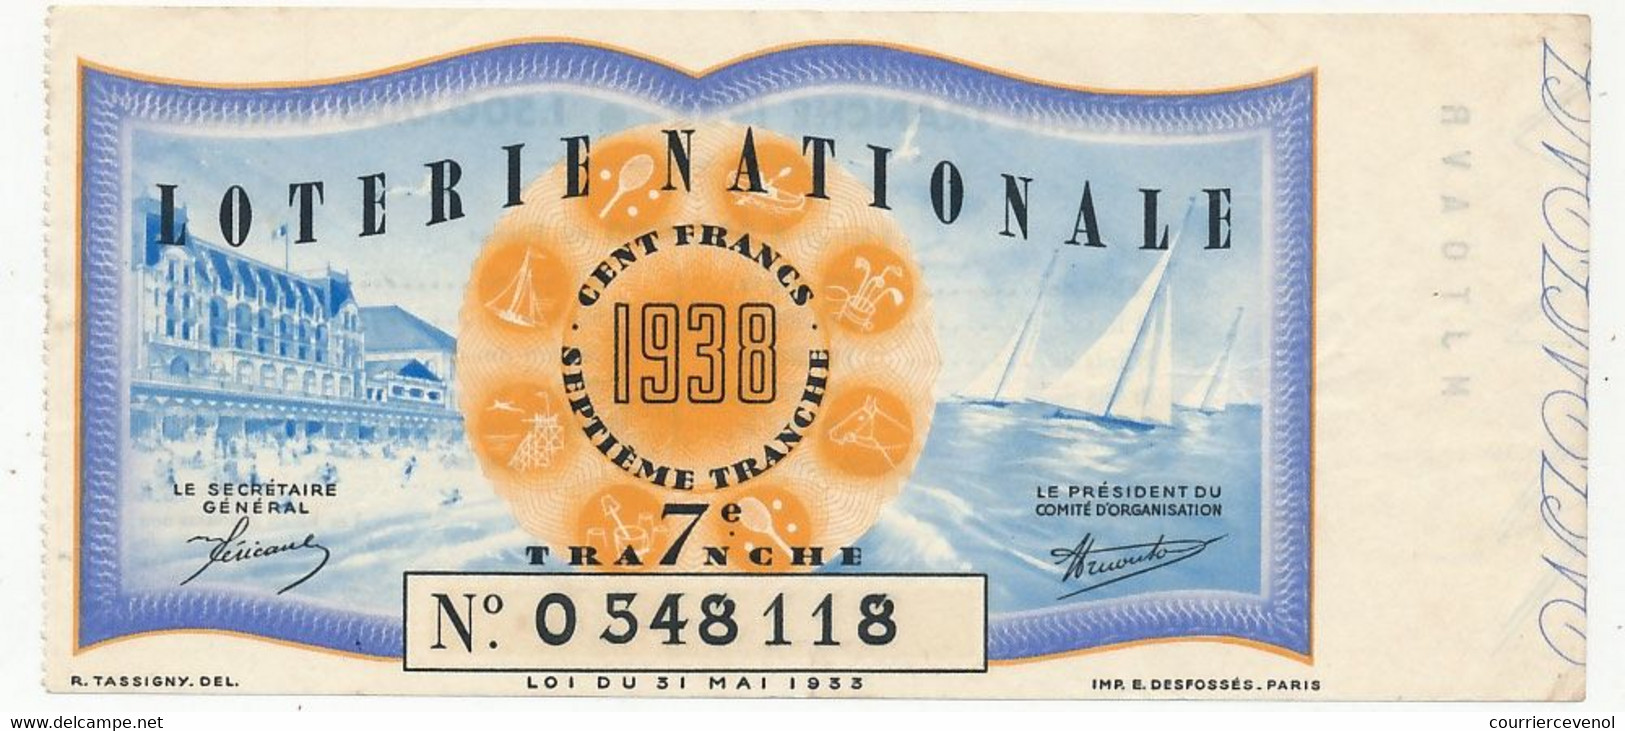 FRANCE - Loterie Nationale - Billet Entier - 7eme Tranche 1938 (Illustration Bord De Mer) - Lotterielose